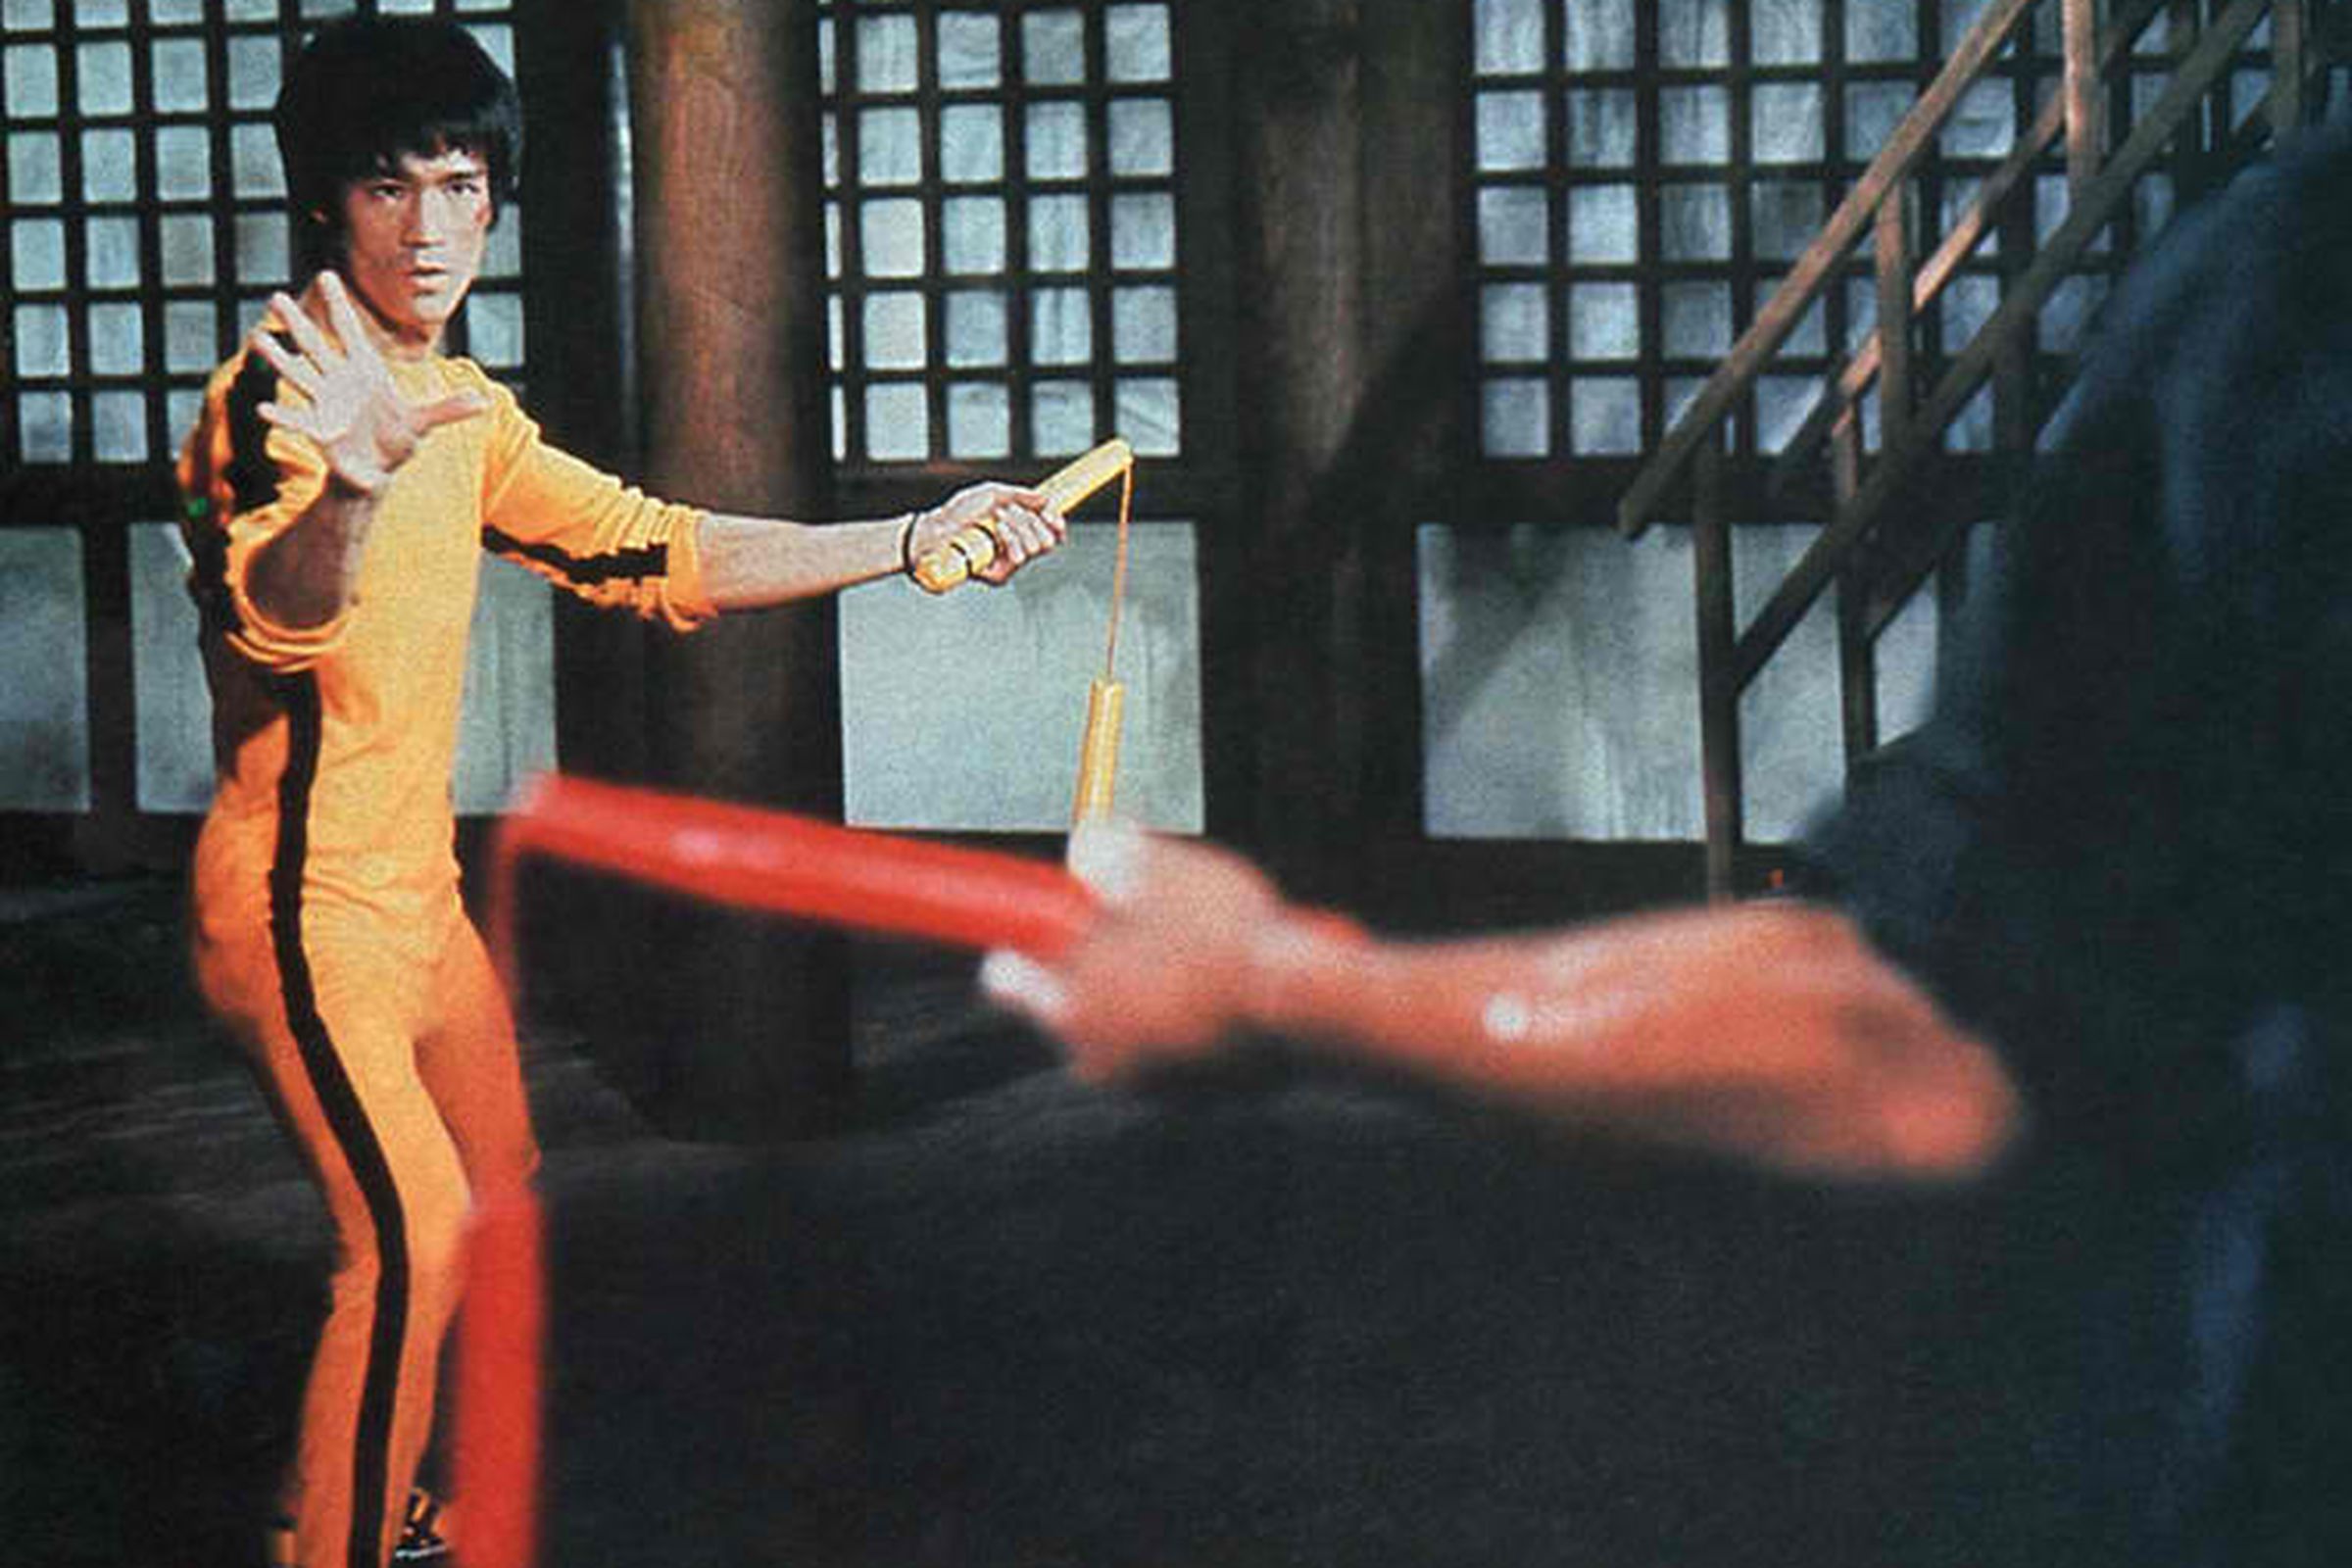 Bruce Lee Game of Death